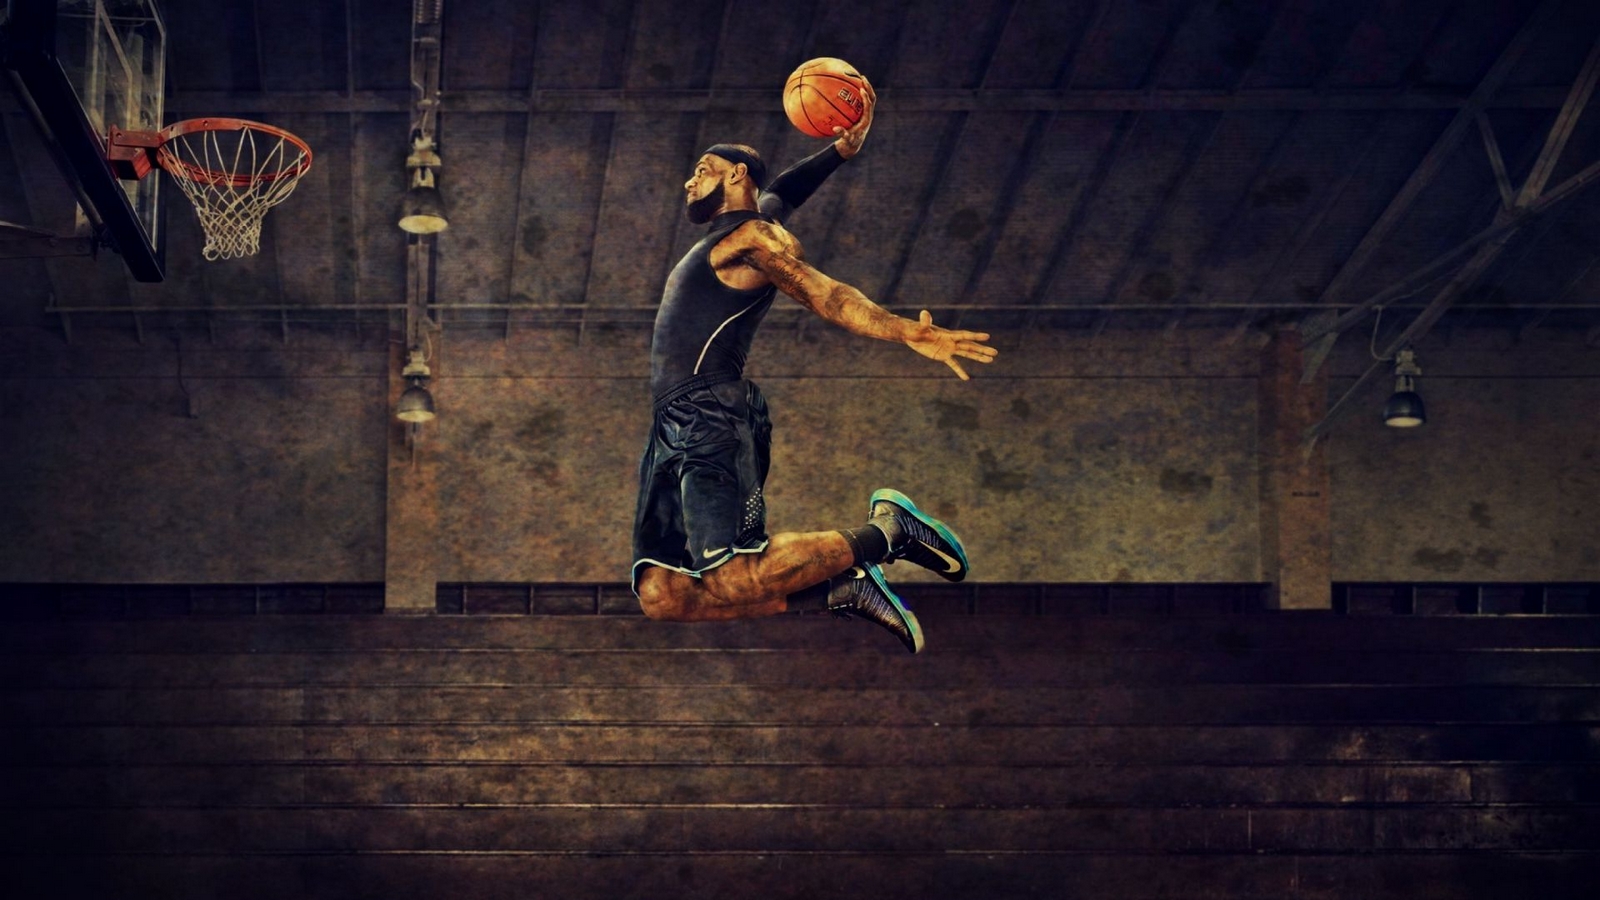 HD wallpaper: LeBron James slamdunk wallpaper, NBA, basketball